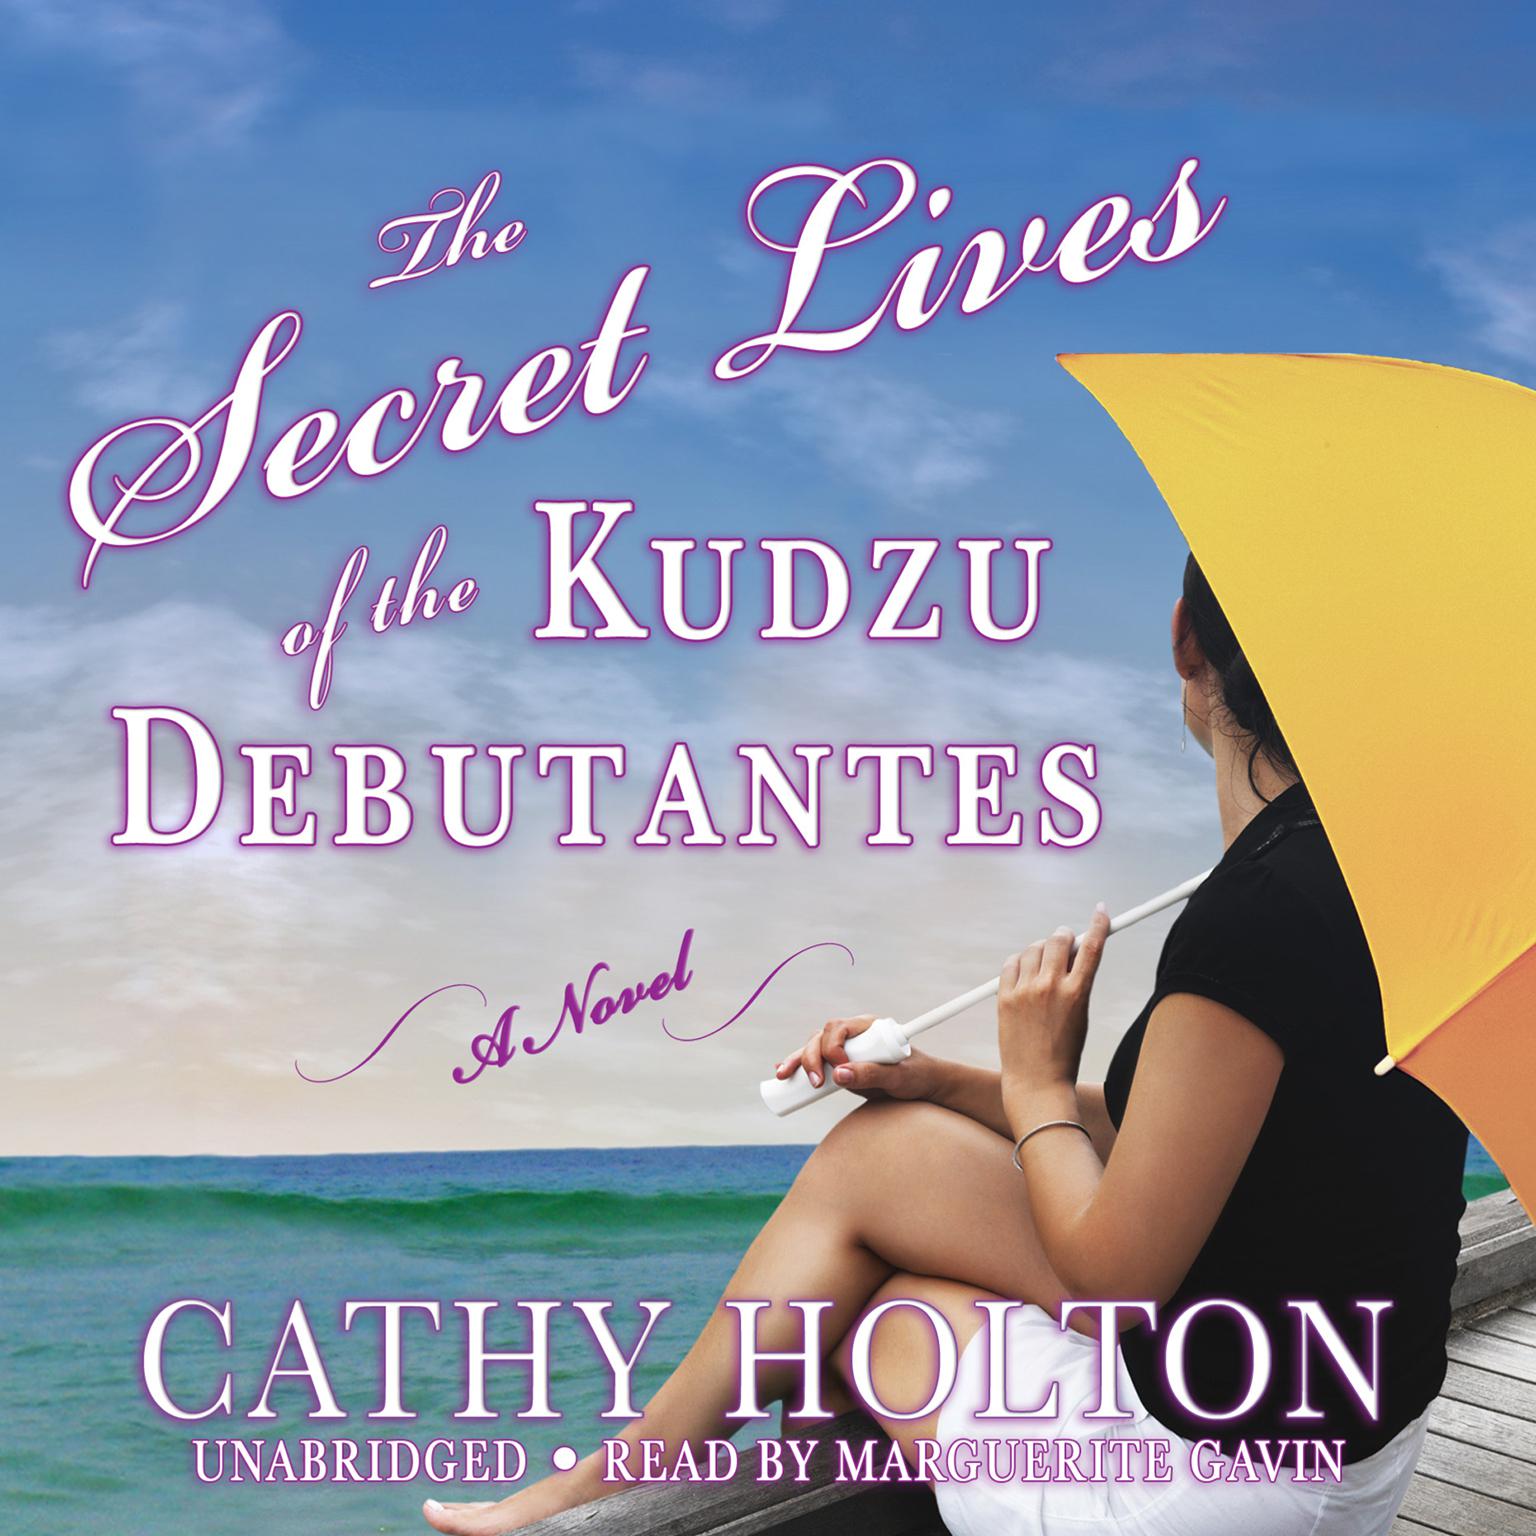 The Secret Lives of the Kudzu Debutantes: A Novel Audiobook, by Cathy Holton